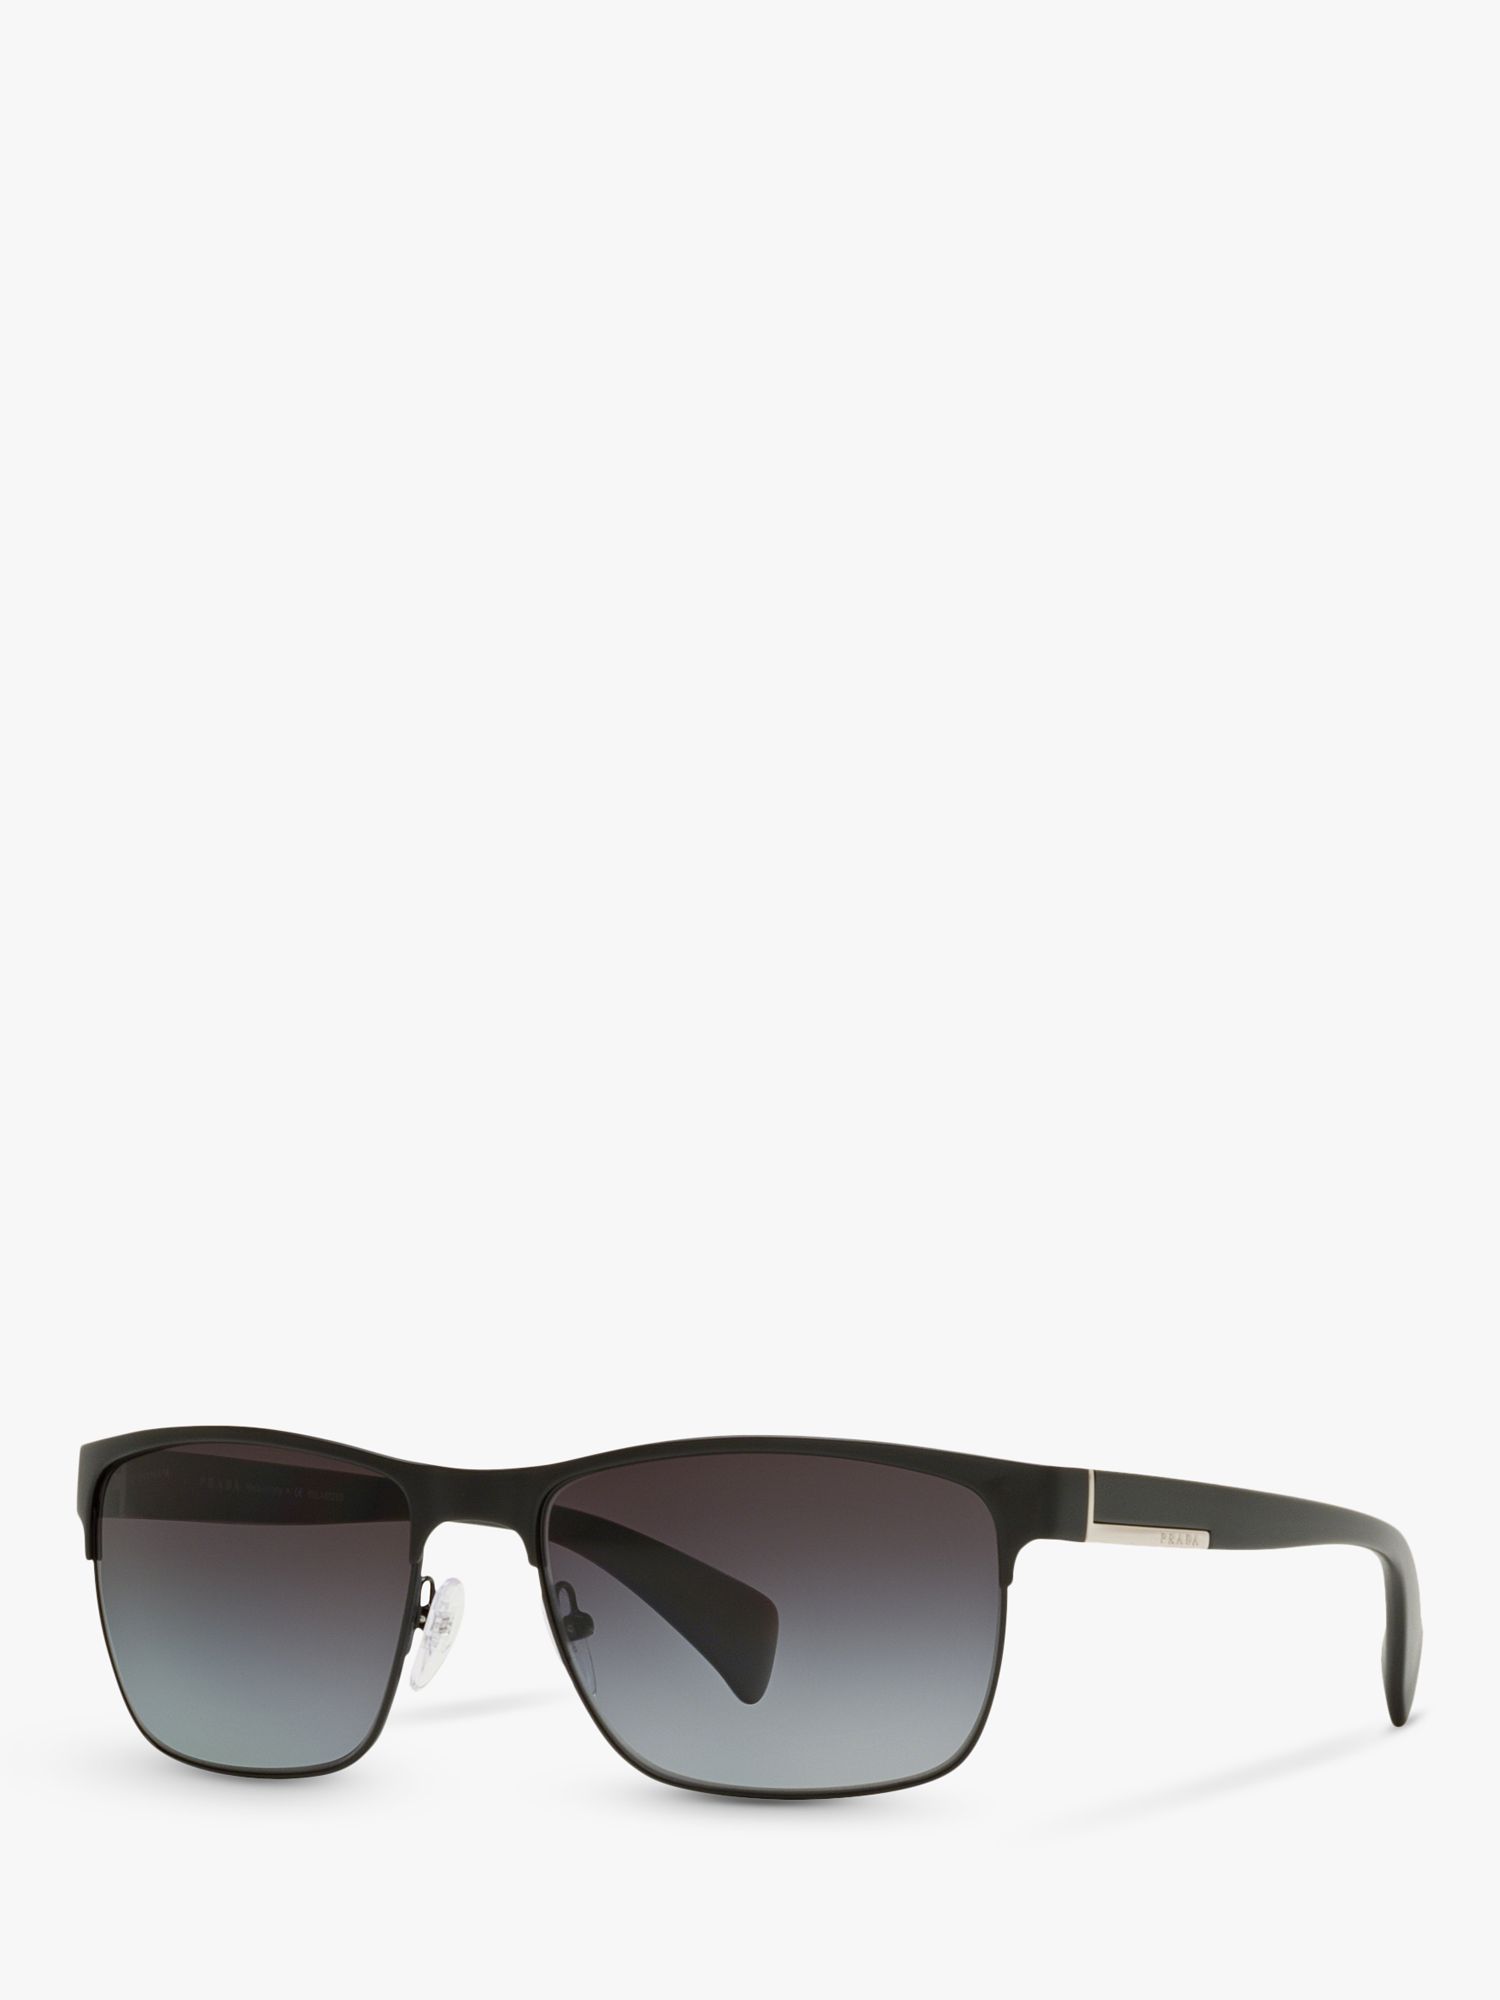 Prada PR 51OS Men's Polarised Rectangular Sunglasses, Matte Black/Black  Gradient at John Lewis & Partners